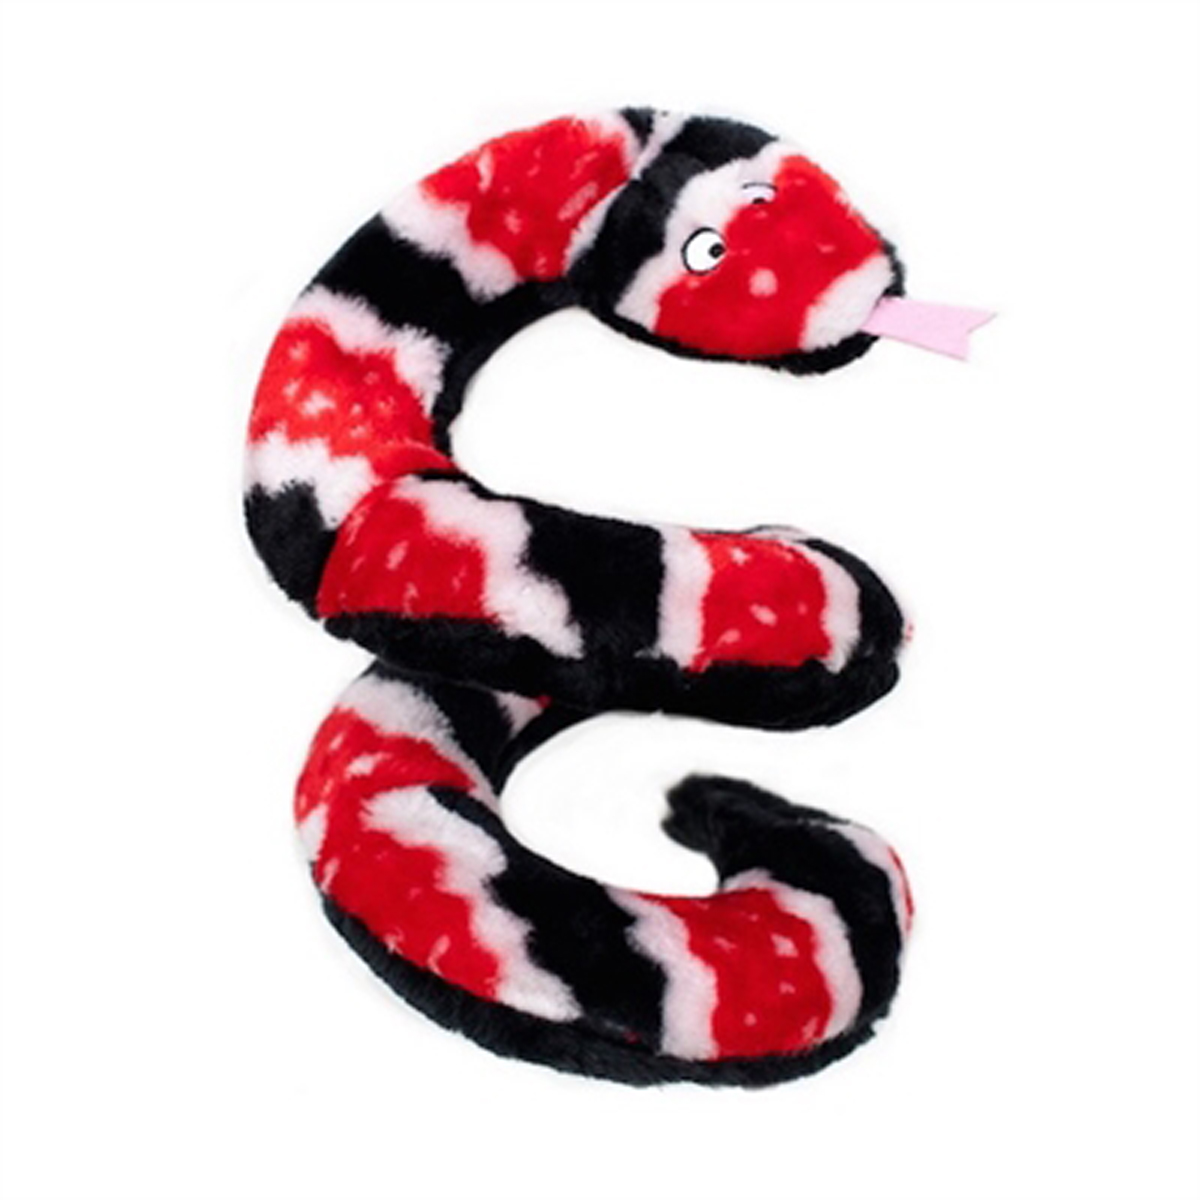 Zippy Snake Dog Toy - Rattlesnake with Same Day Shipping | BaxterBoo